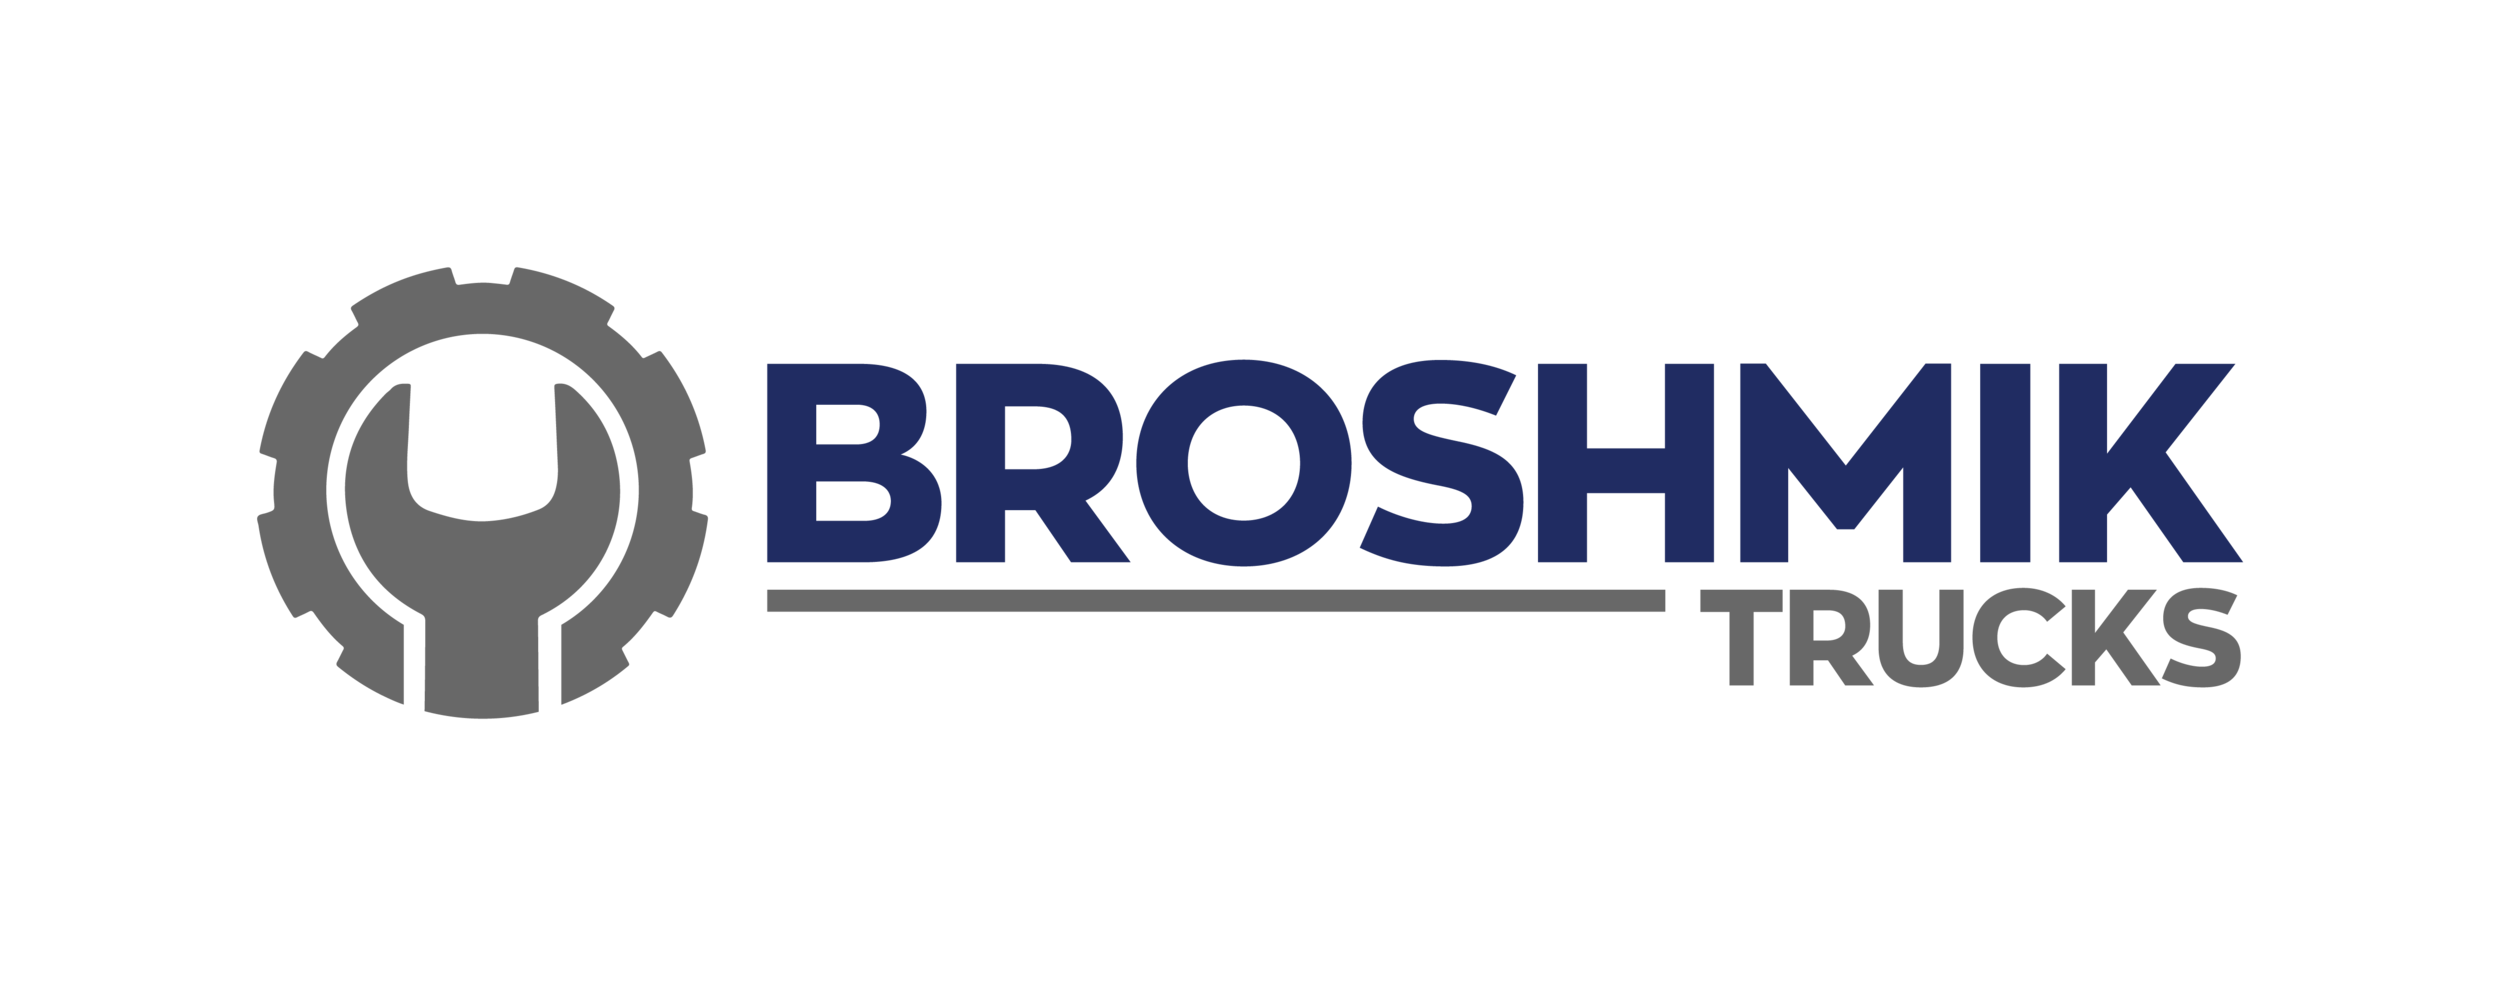 Broshmik Trucks Limited